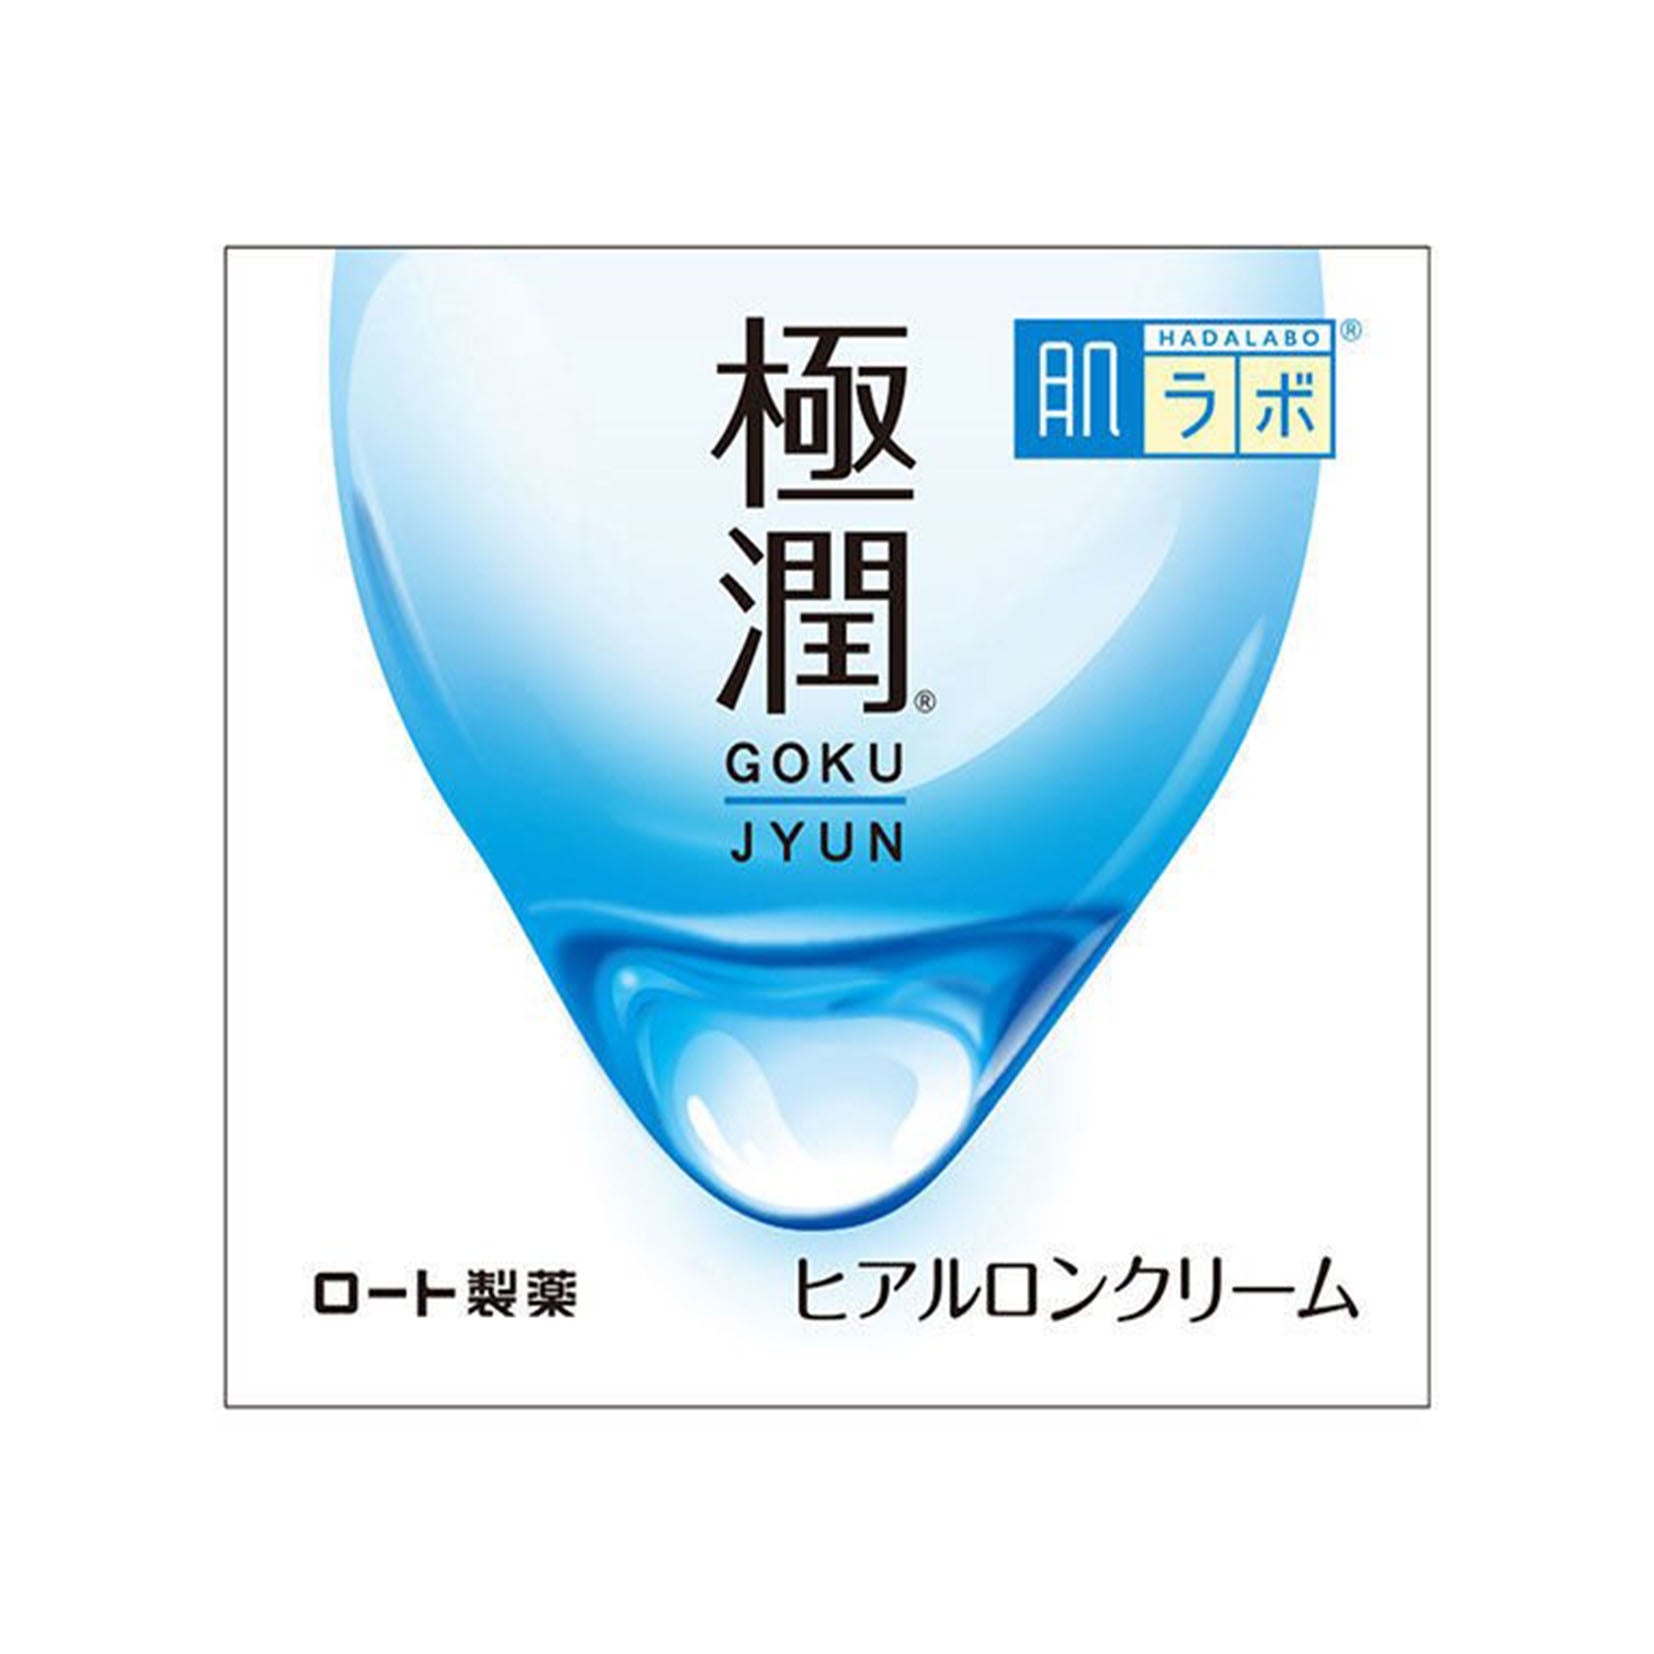 Rohto Hadalabo Gokujun  Hyaluronic Acid High Humidity Cream 50g - Harajuku Culture Japan - Japanease Products Store Beauty and Stationery